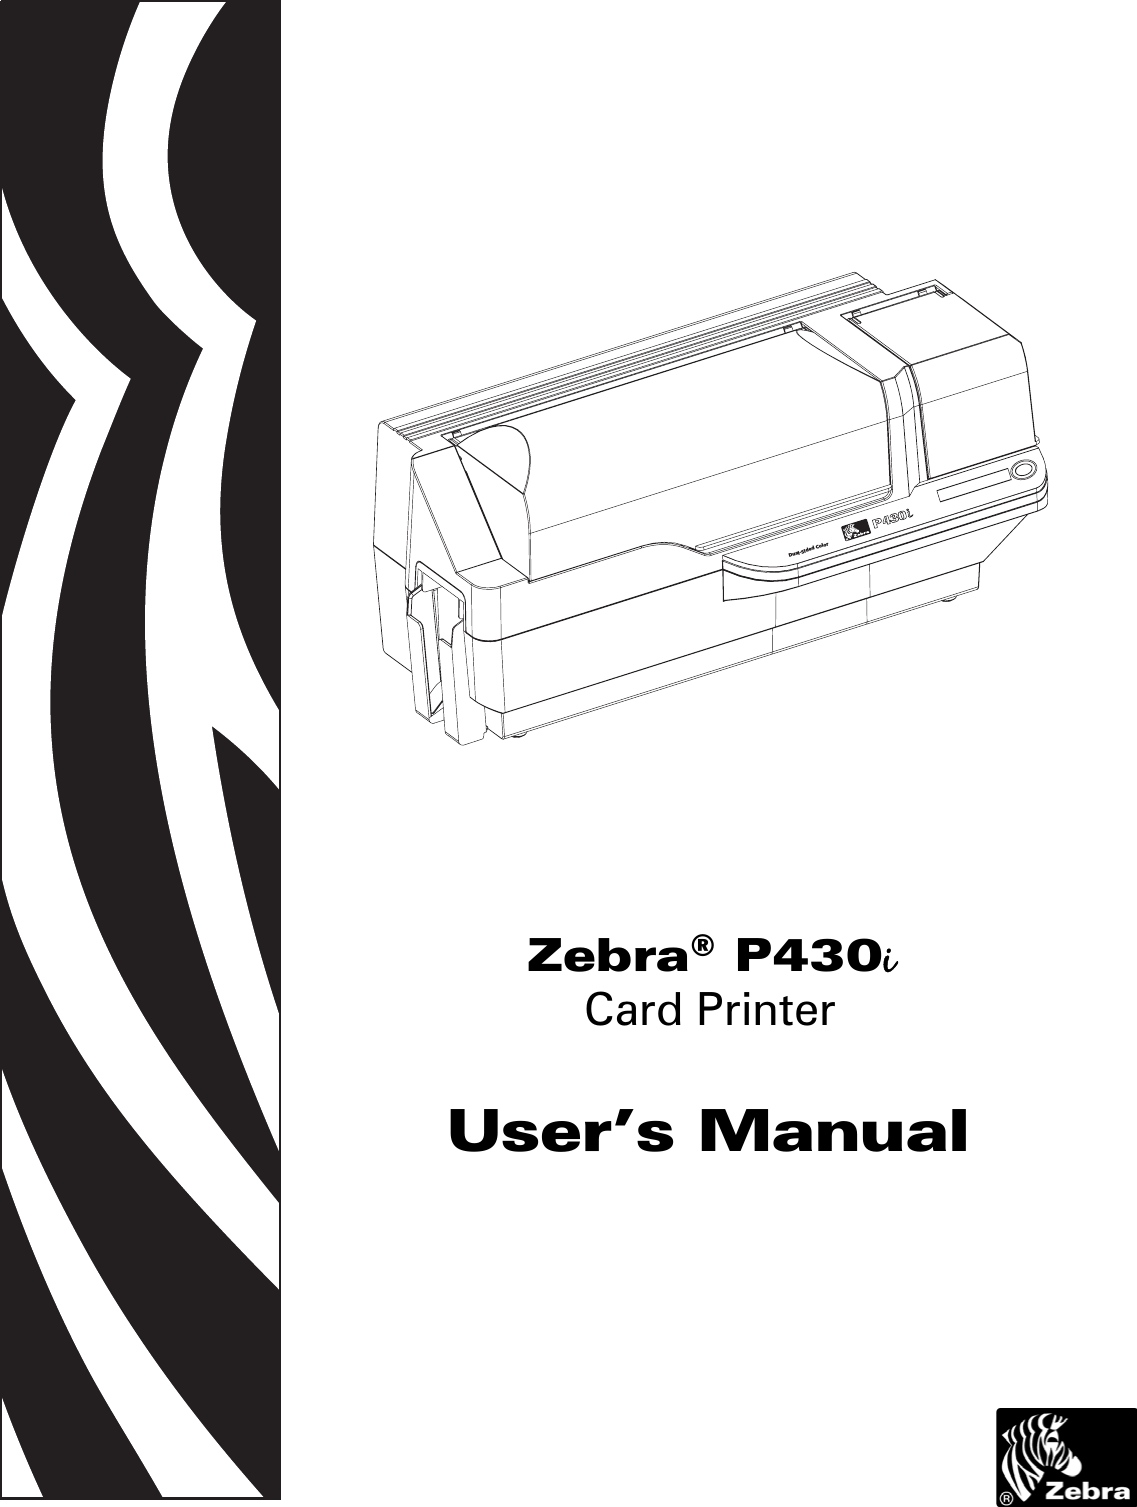 User’s ManualZebra® P430iCard PrinterDual-Sided Color